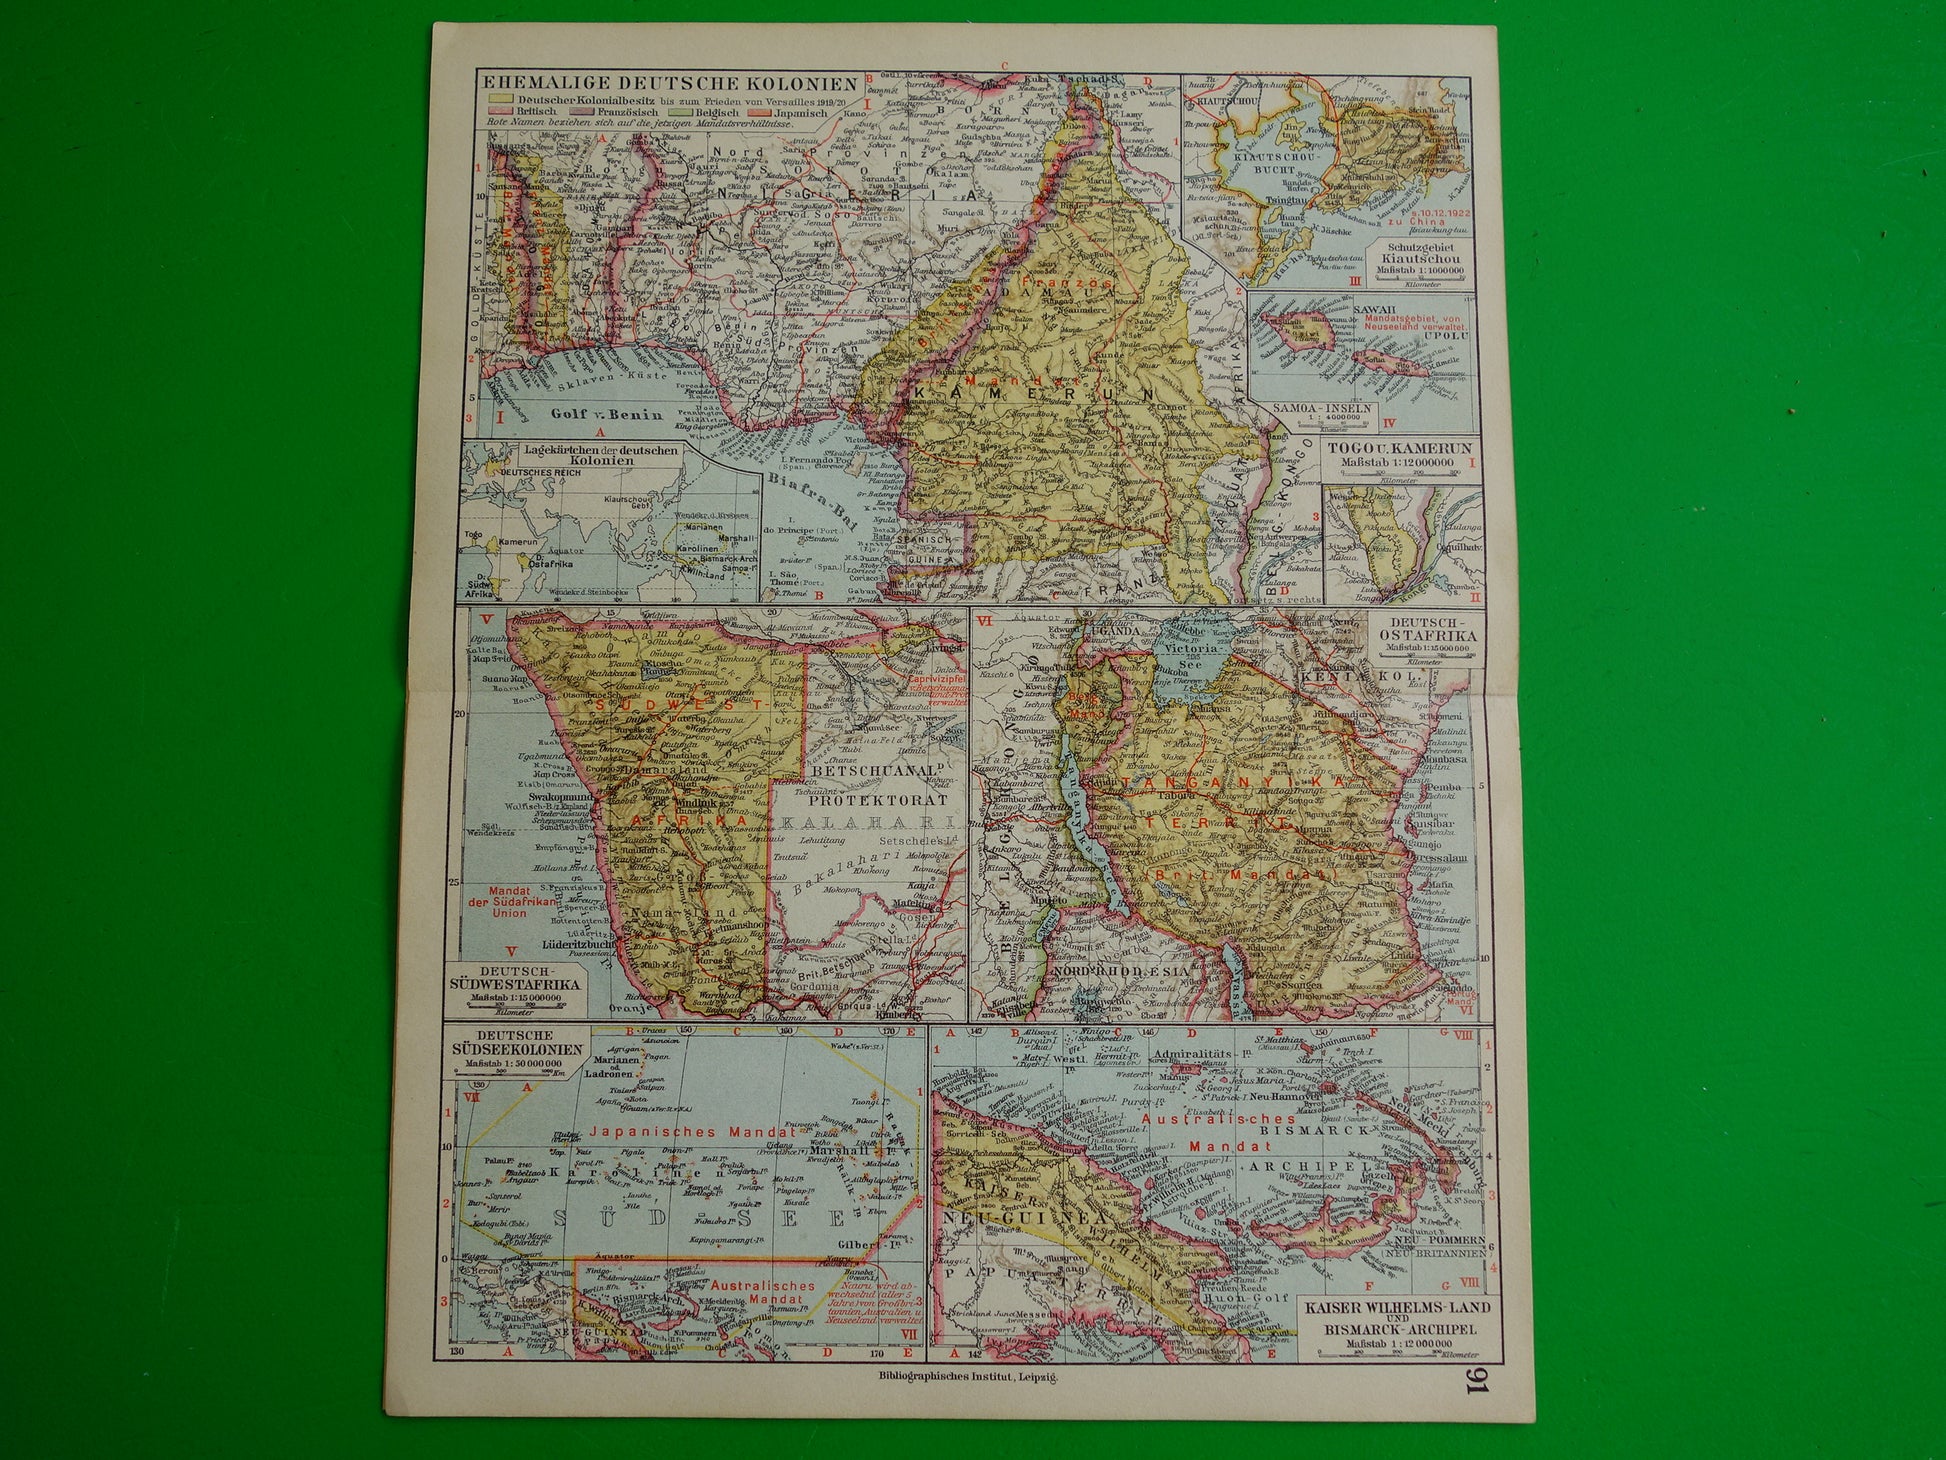 Duitse Koloniën oude landkaart Kamerun Togo Namibië Duits-Oostafrika Bismarck Archipel vintage kaarten